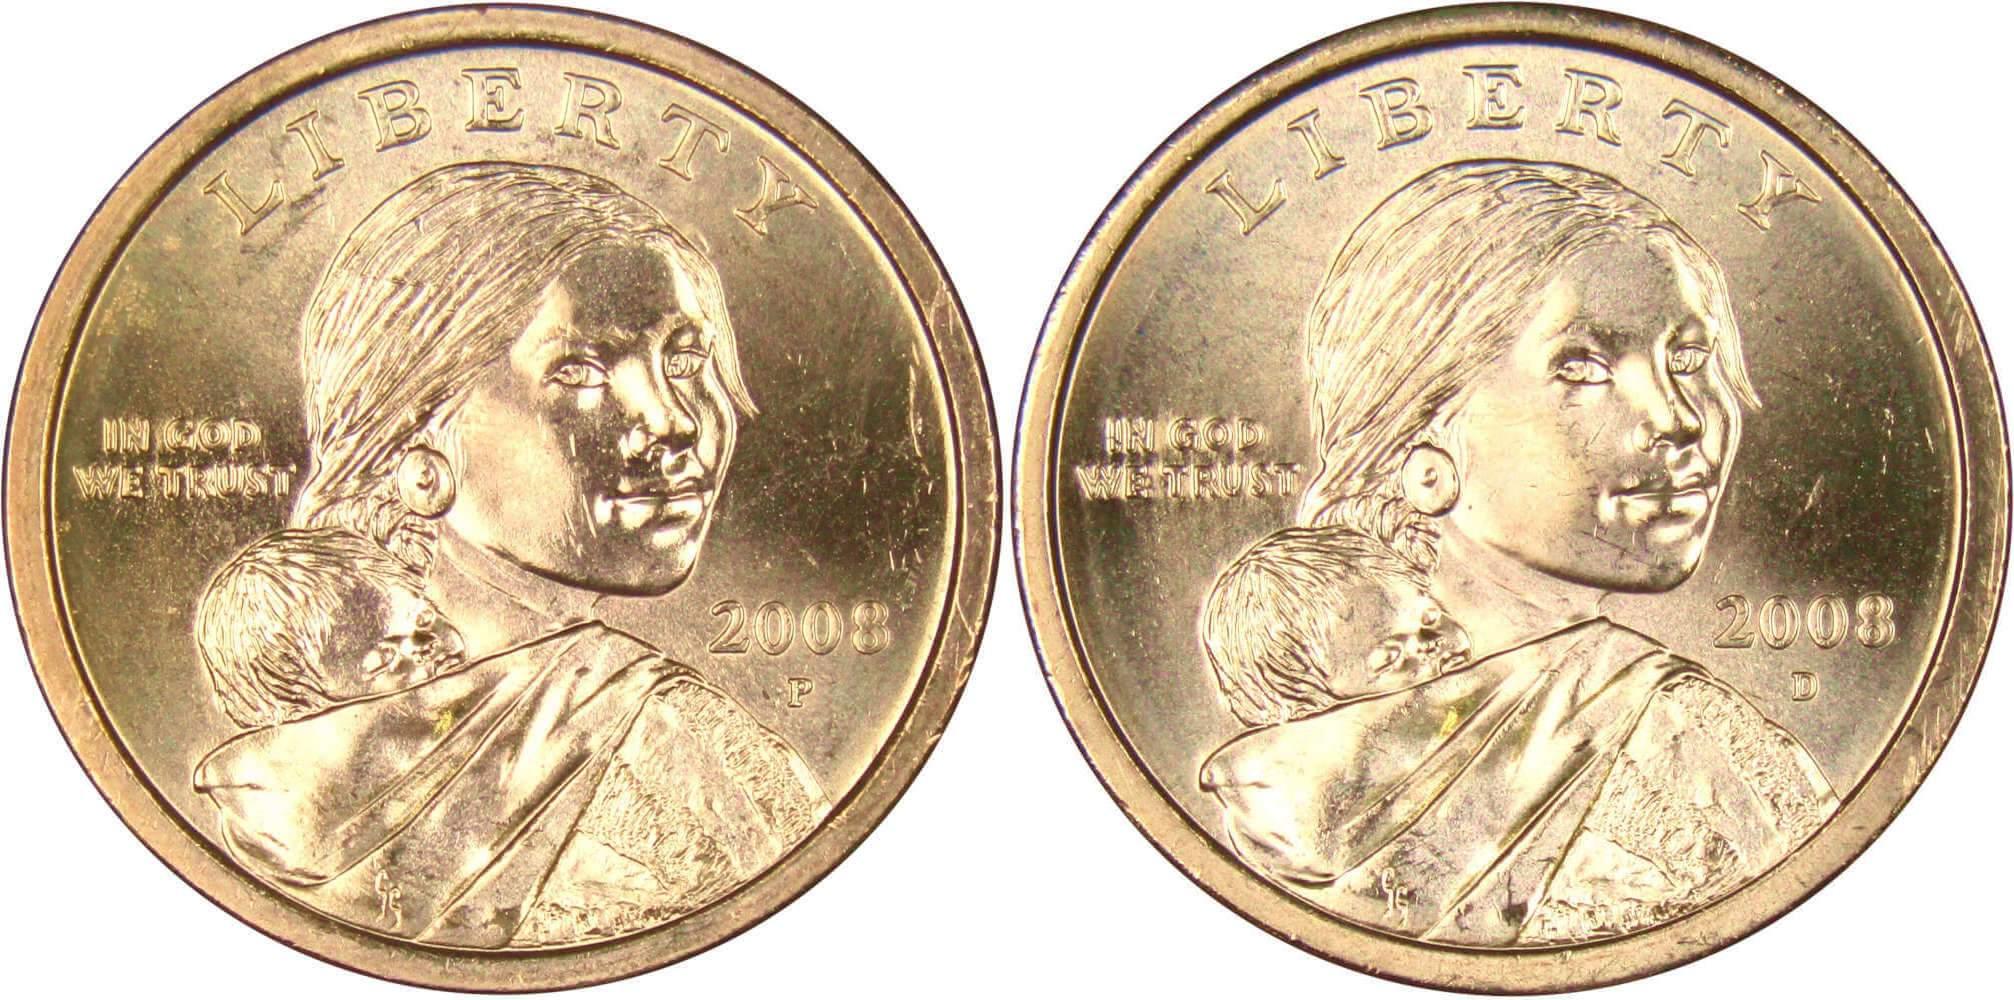 2008 P&D Sacagawea Native American Dollar 2 Coin Set BU Uncirculated $1